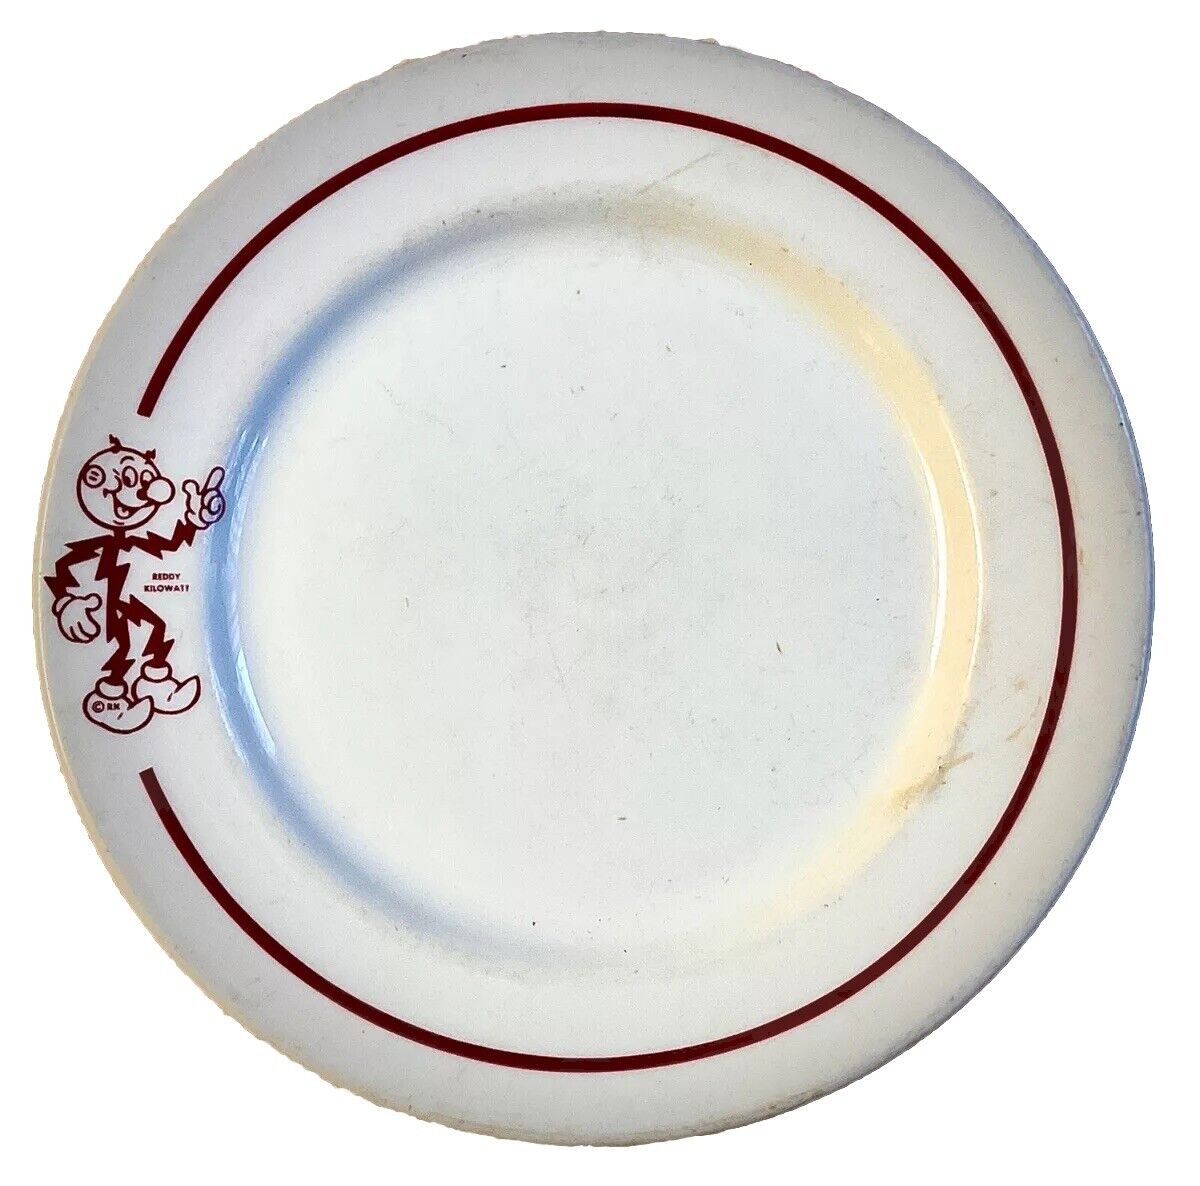 Rare Antique/Vintage Ready Kilowatt, 9” Dinner Plate, shows ware-no chips/cracks